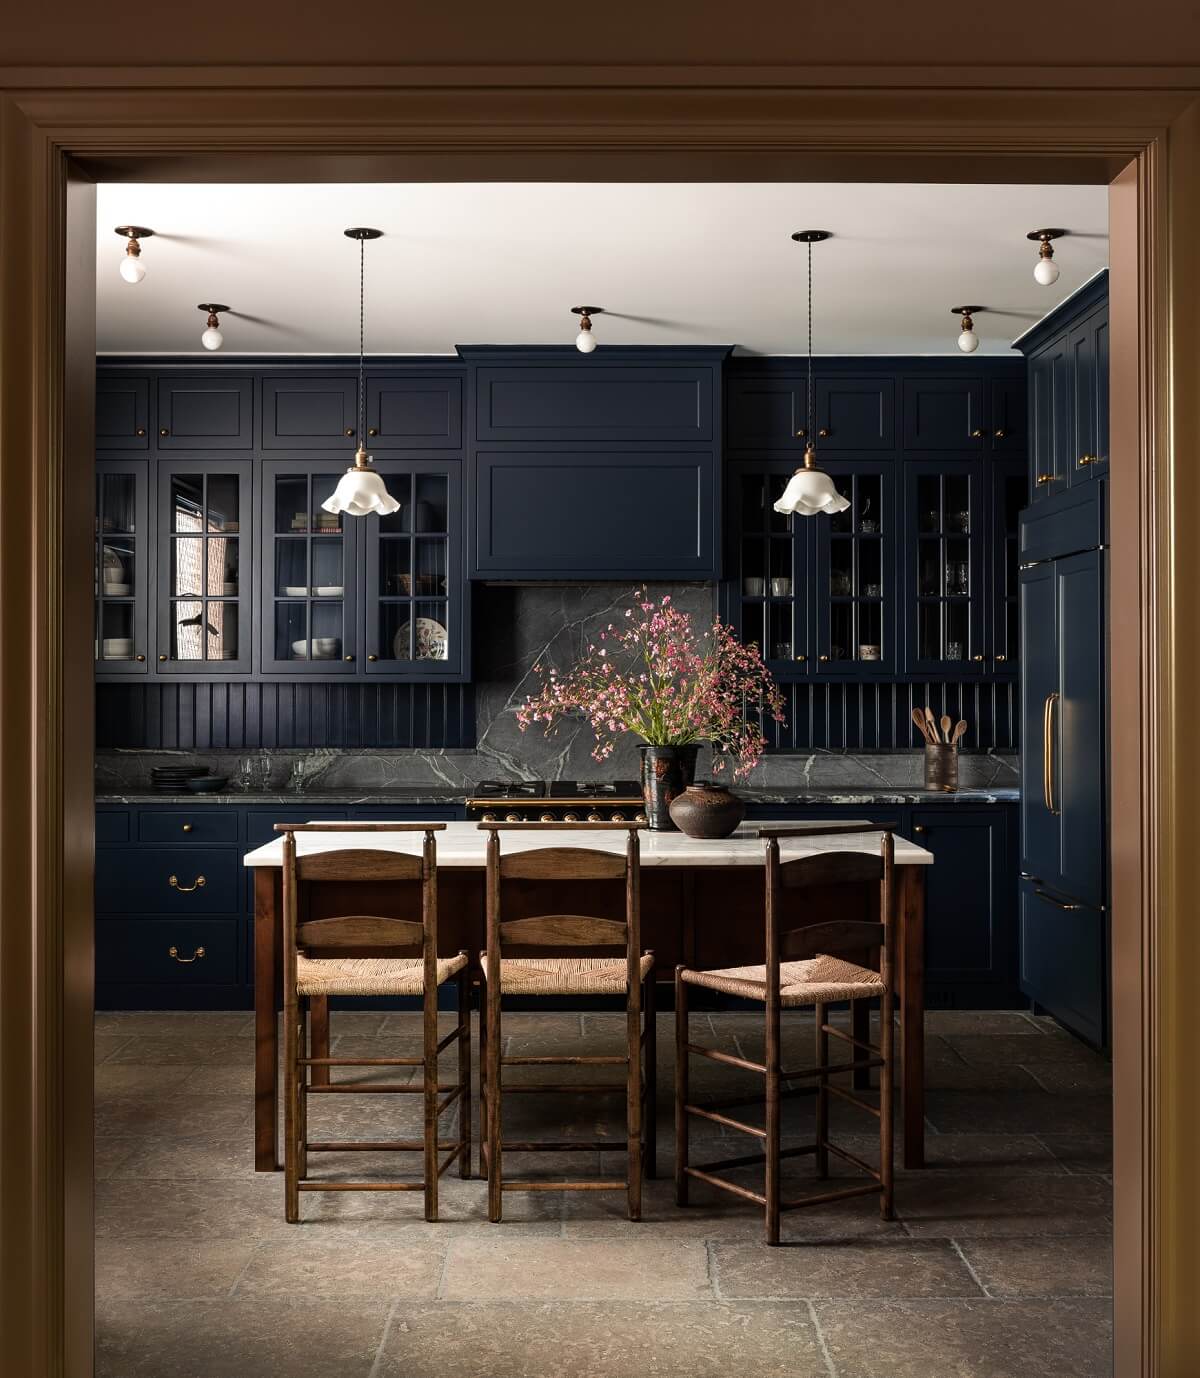 Heidi-Caillier-Design-Cow-Hollow-SF-interior-design-dark-kitchen-reclaimed-limestone-floors